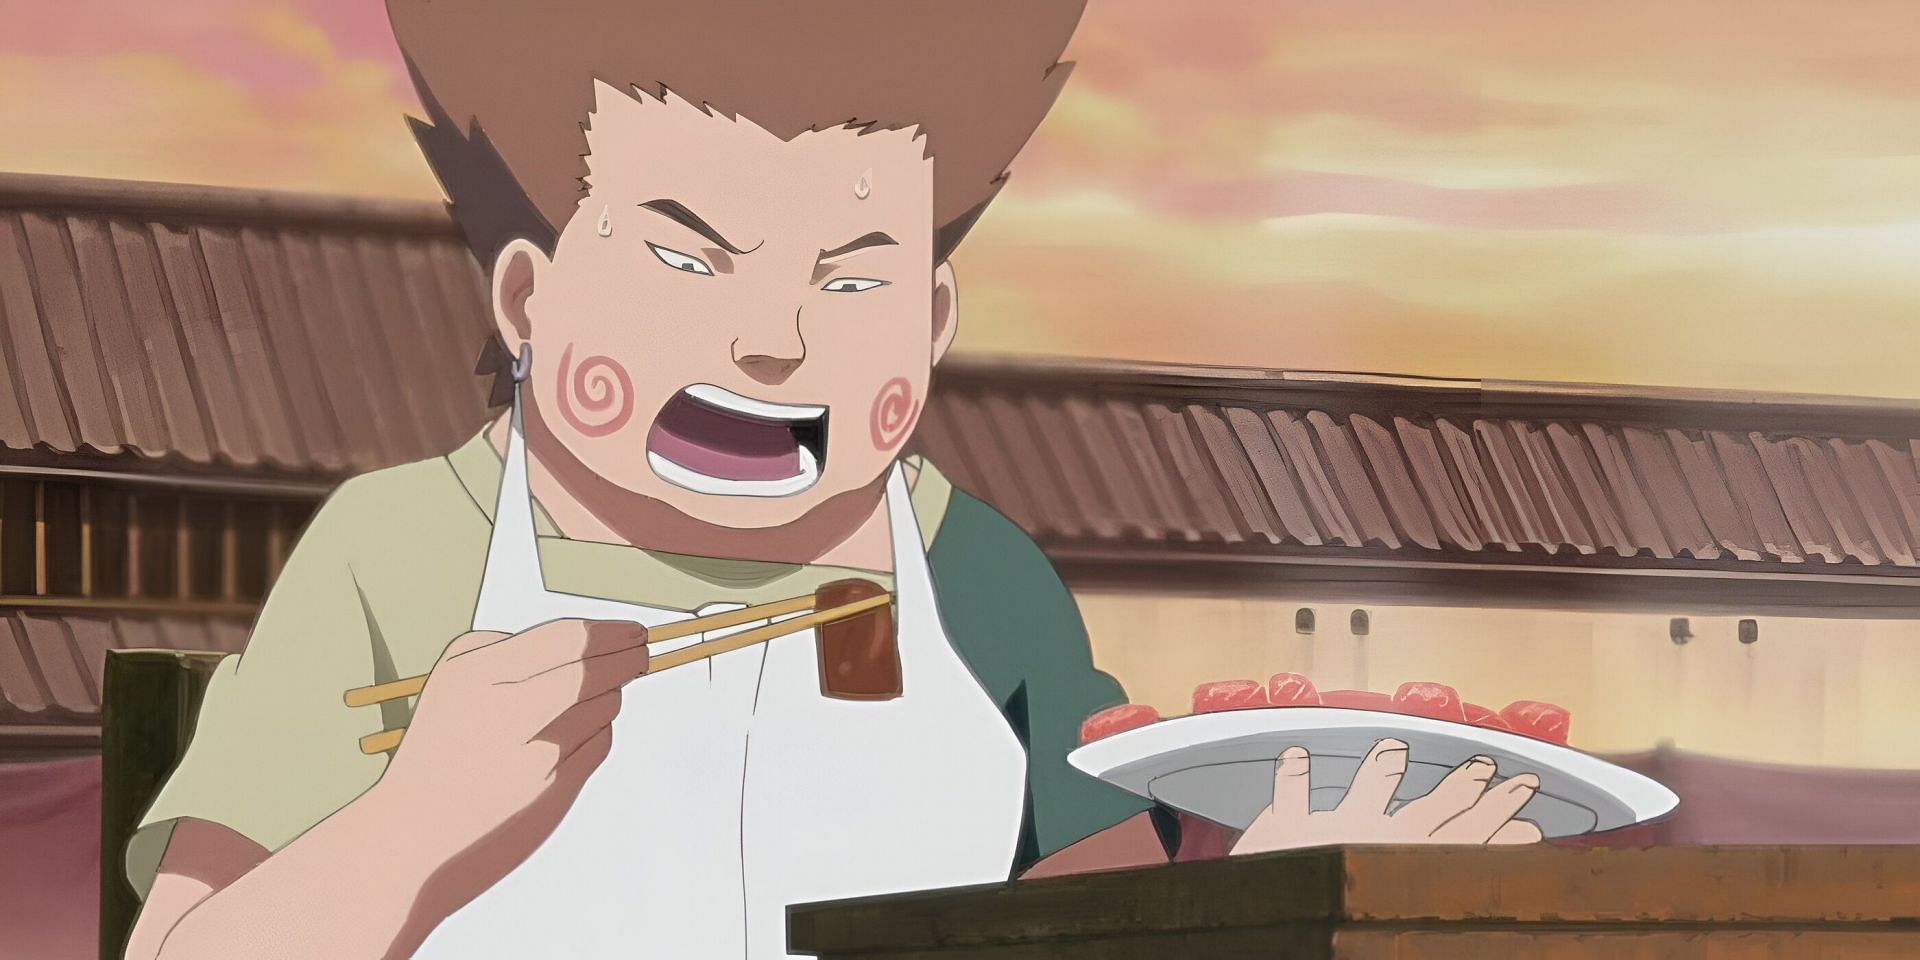 Choji Akimichi as seen in Naruto (Image via Studio Pierrot)